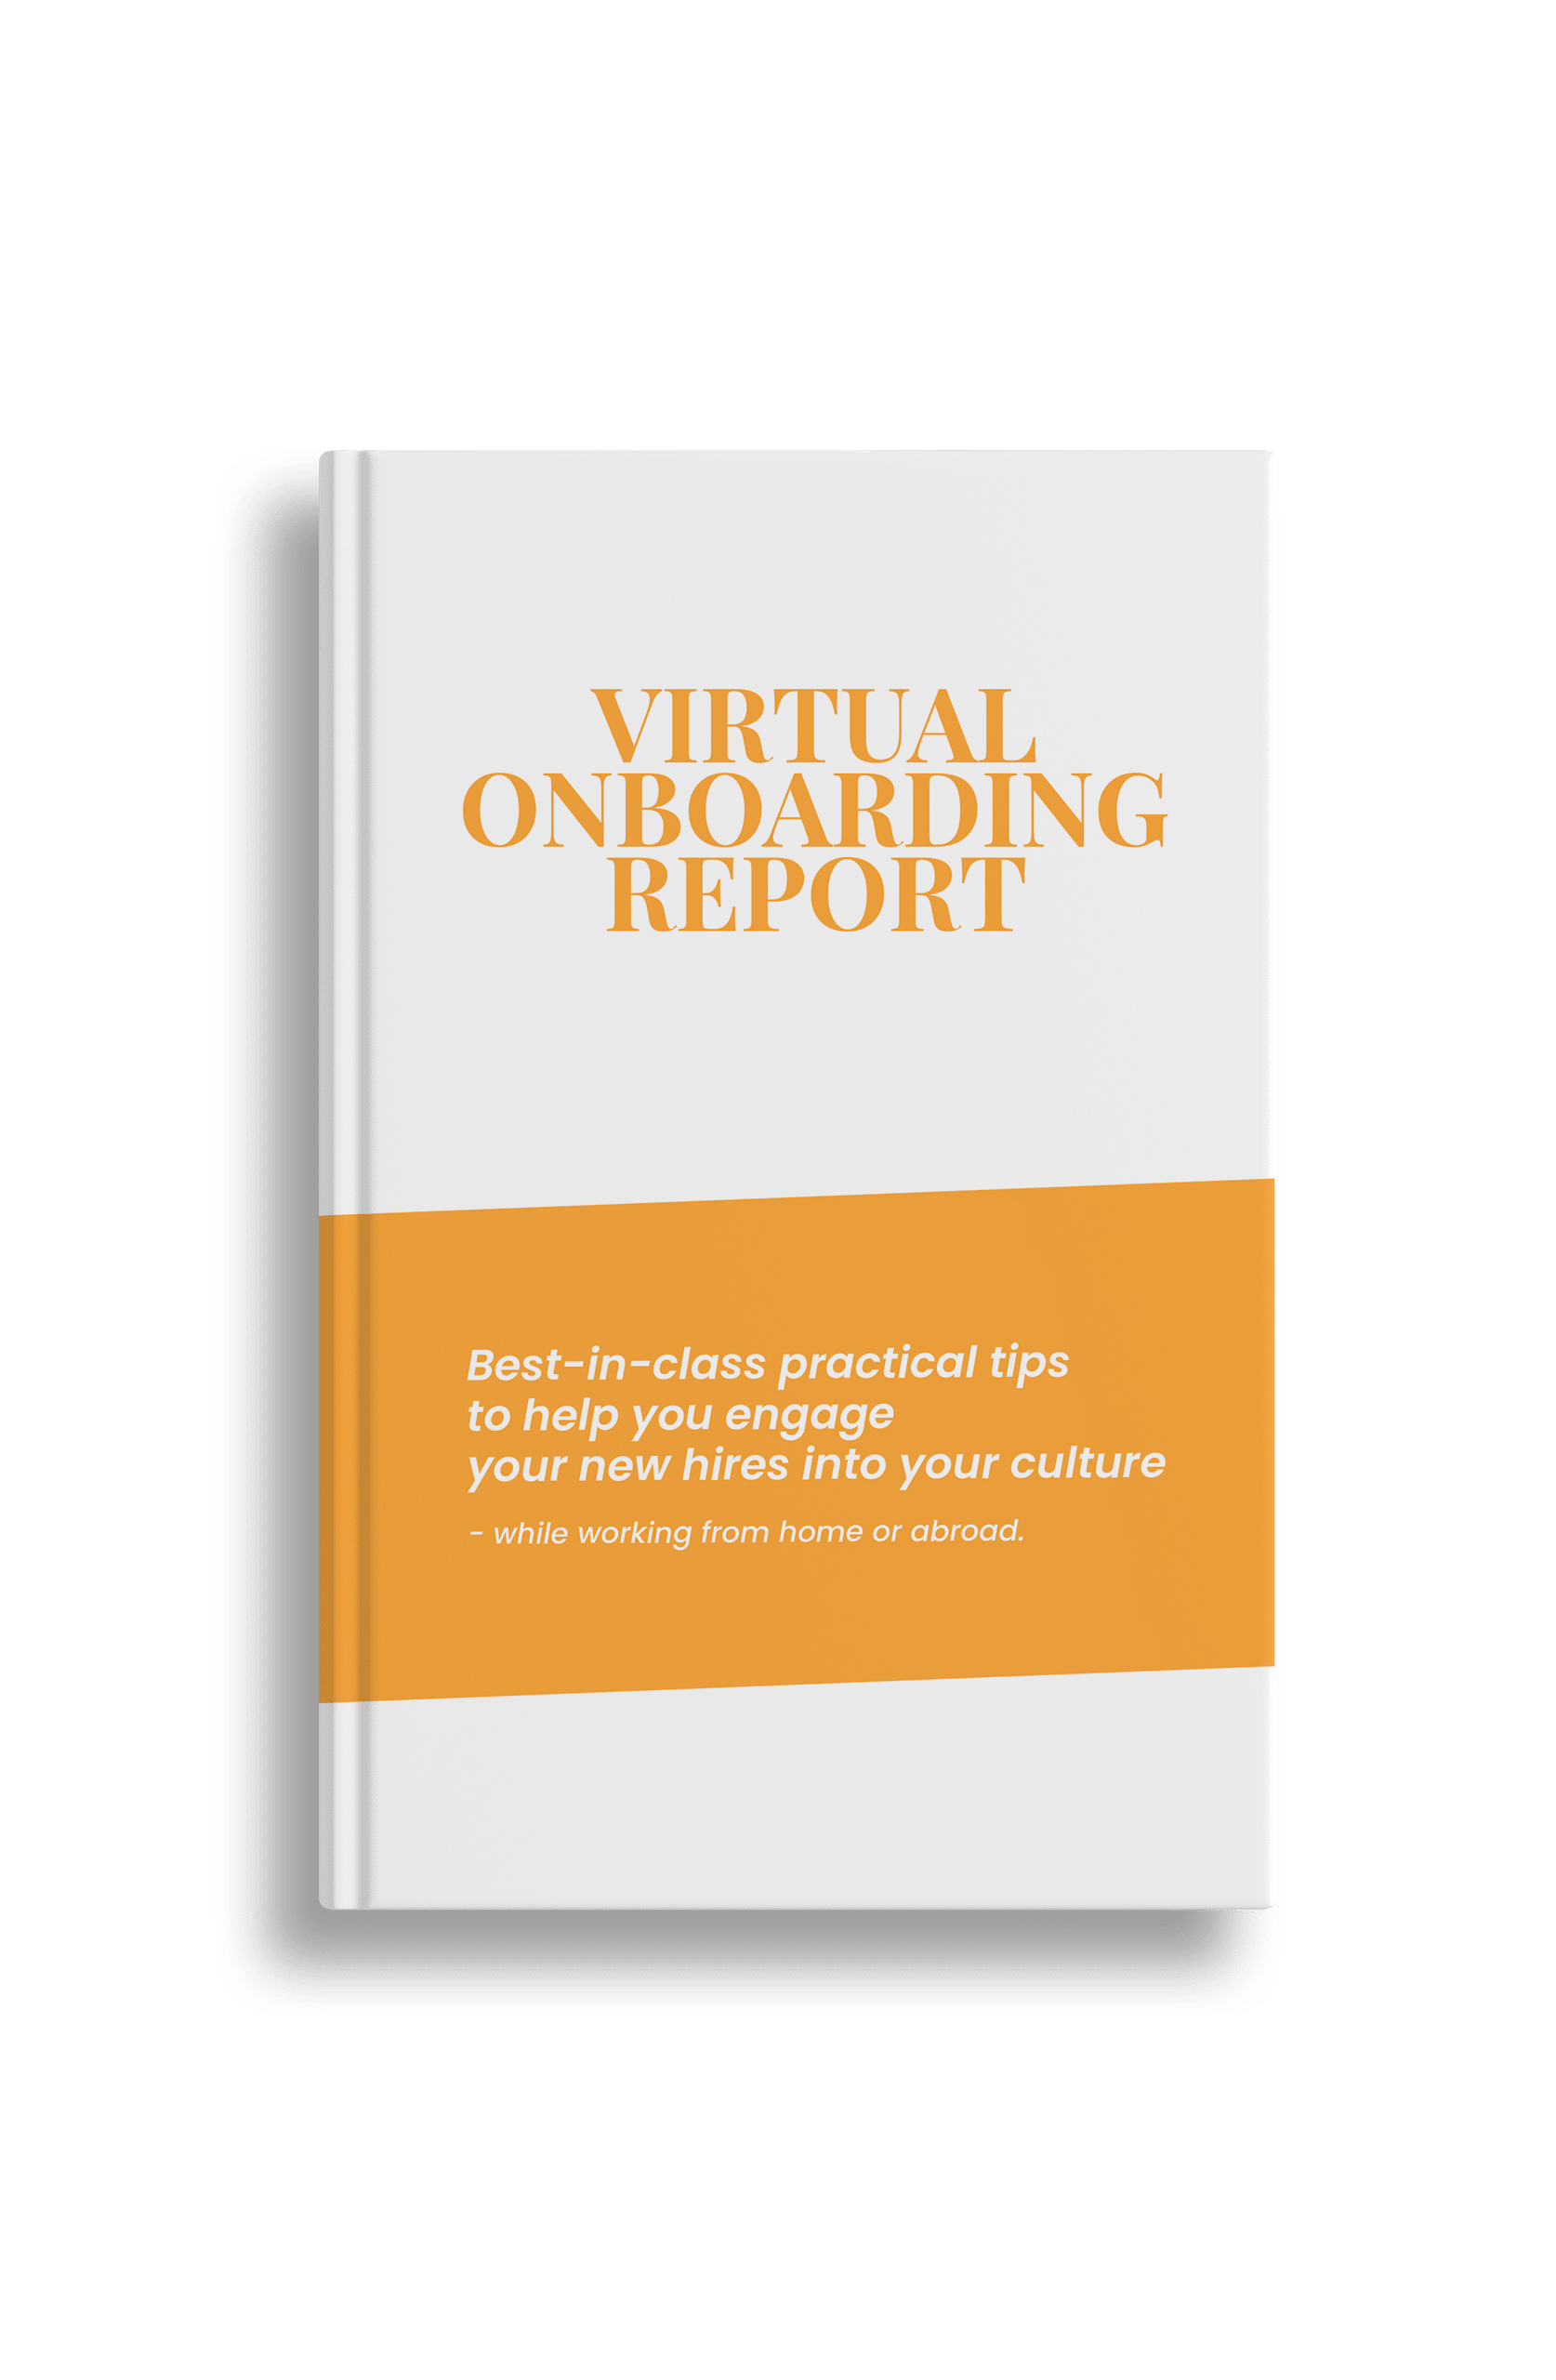 virtual onboarding report downloadV